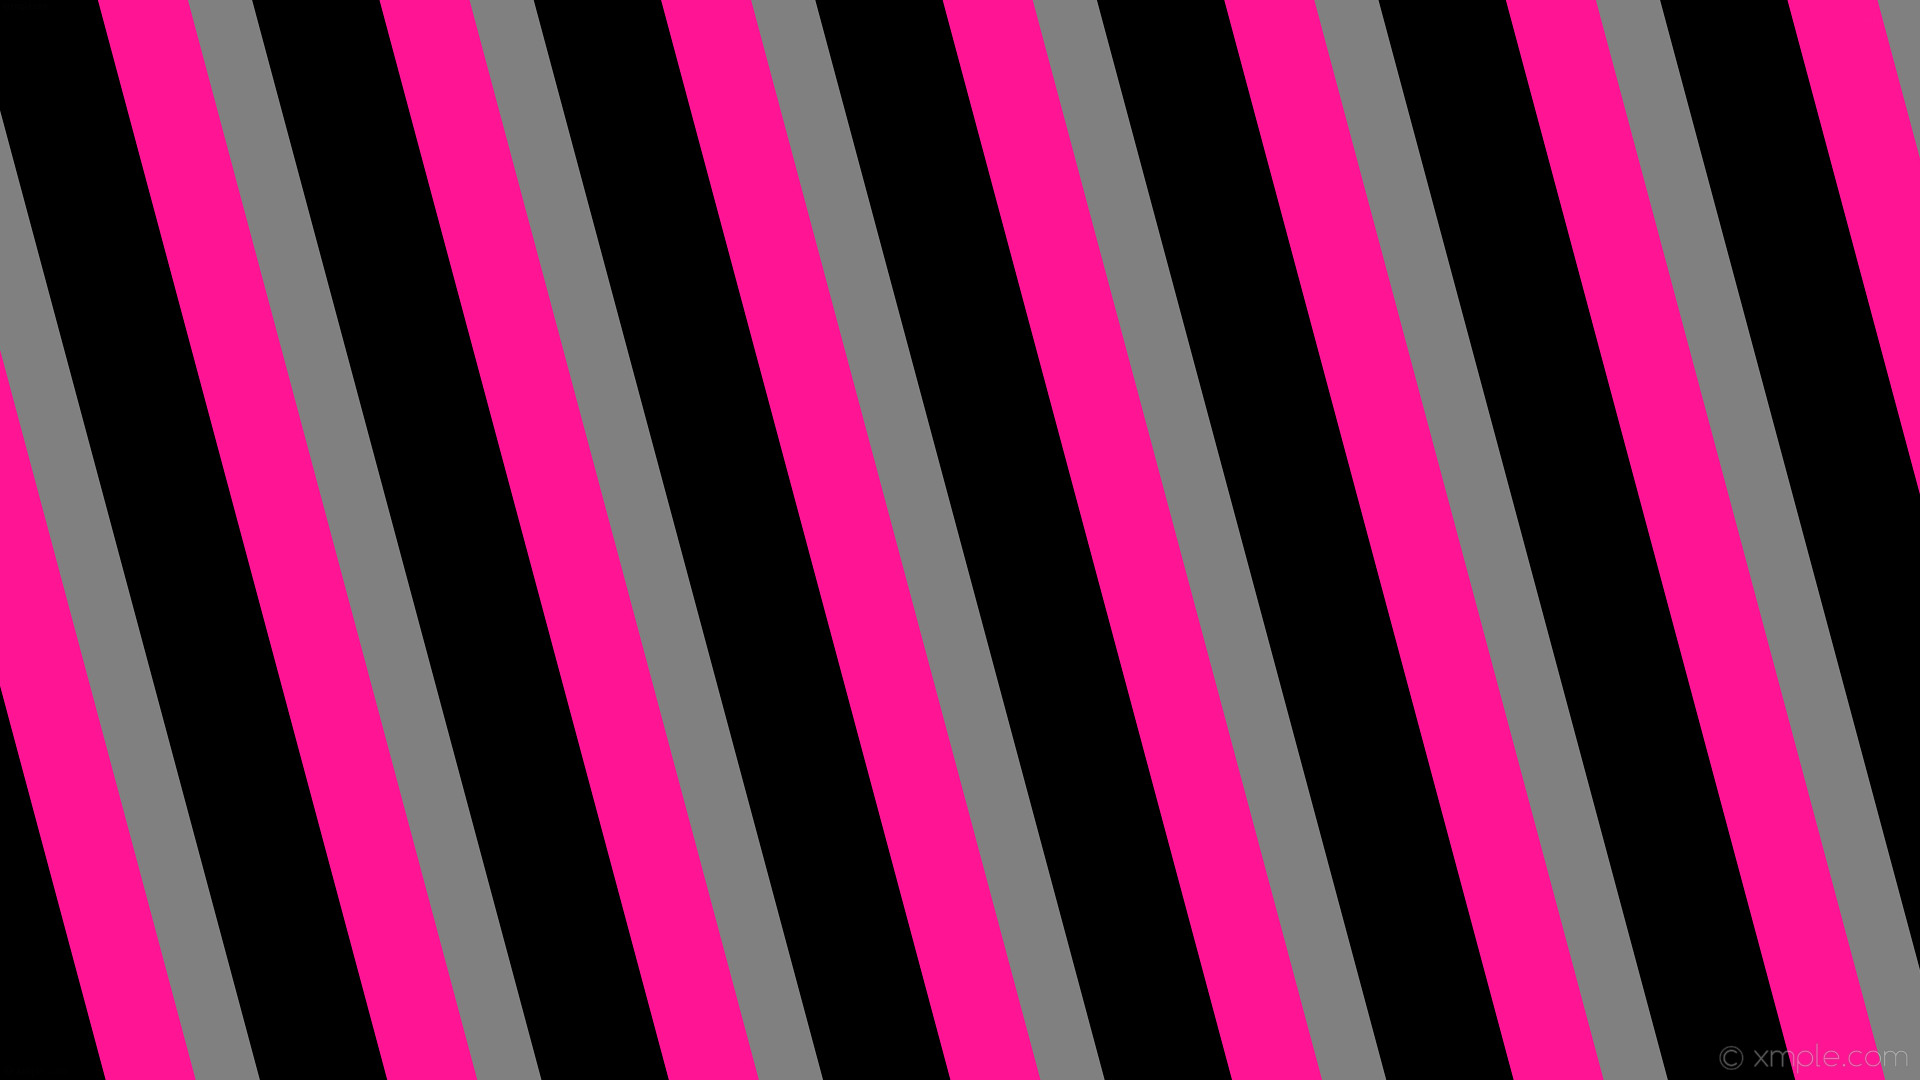 1920x1080 wallpaper streaks stripes black pink lines grey gray deep pink #808080  #ff1493 #000000